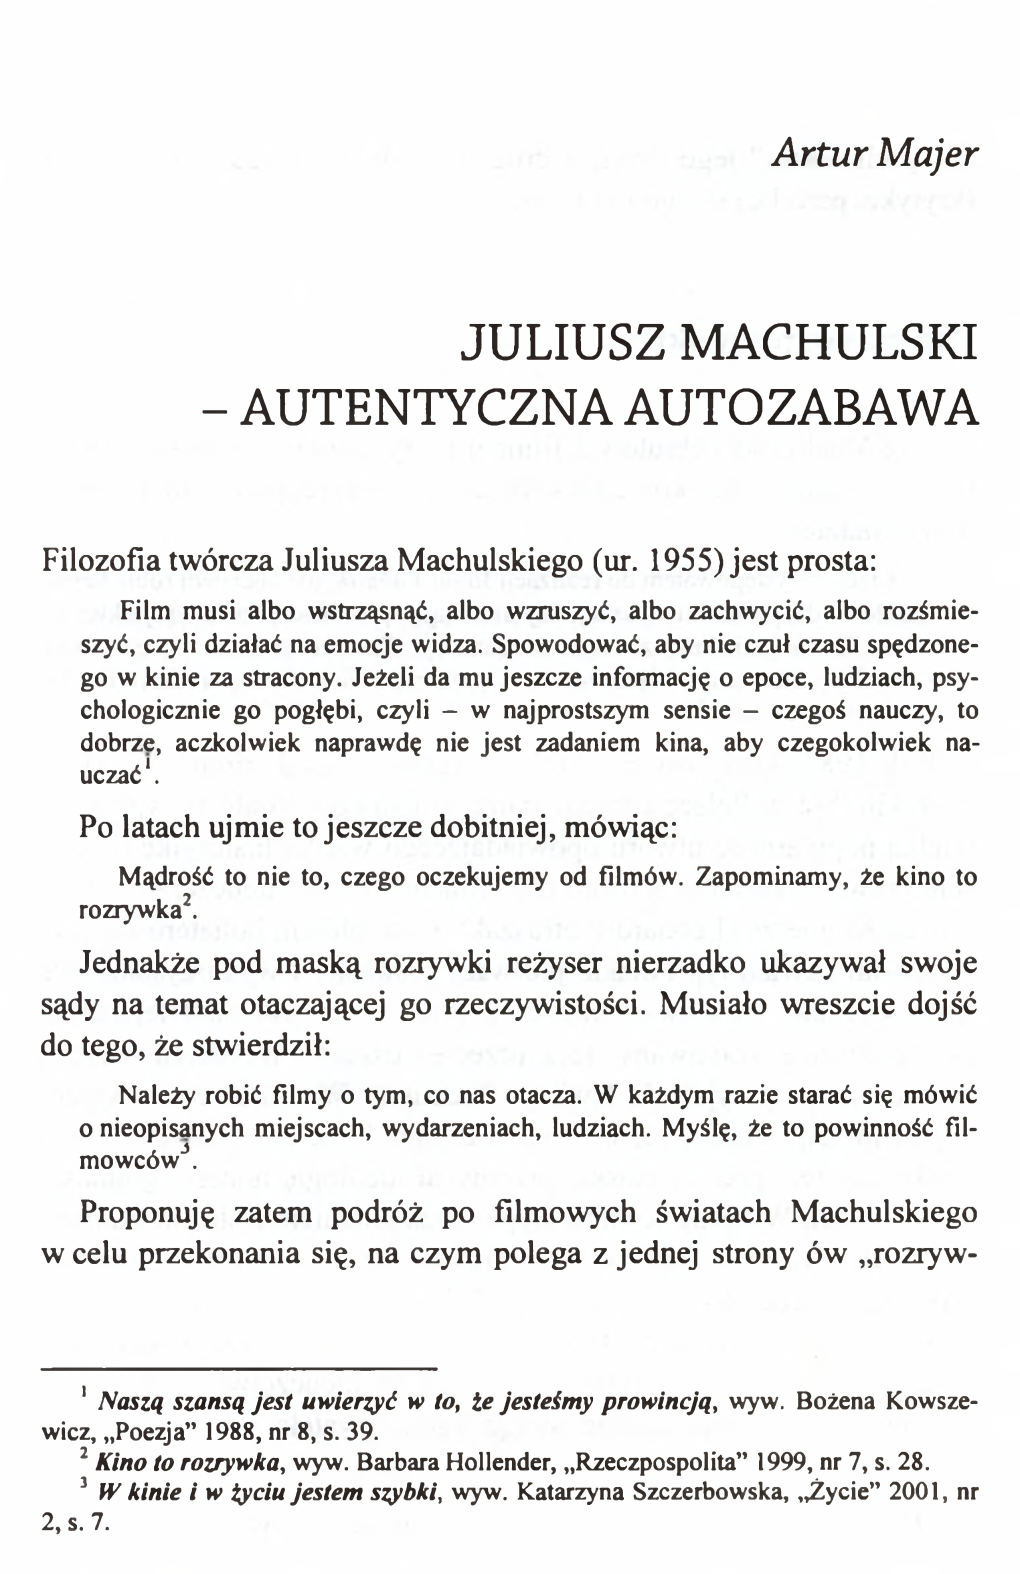 Juliusz Machulski - Autentyczna Autozabawa